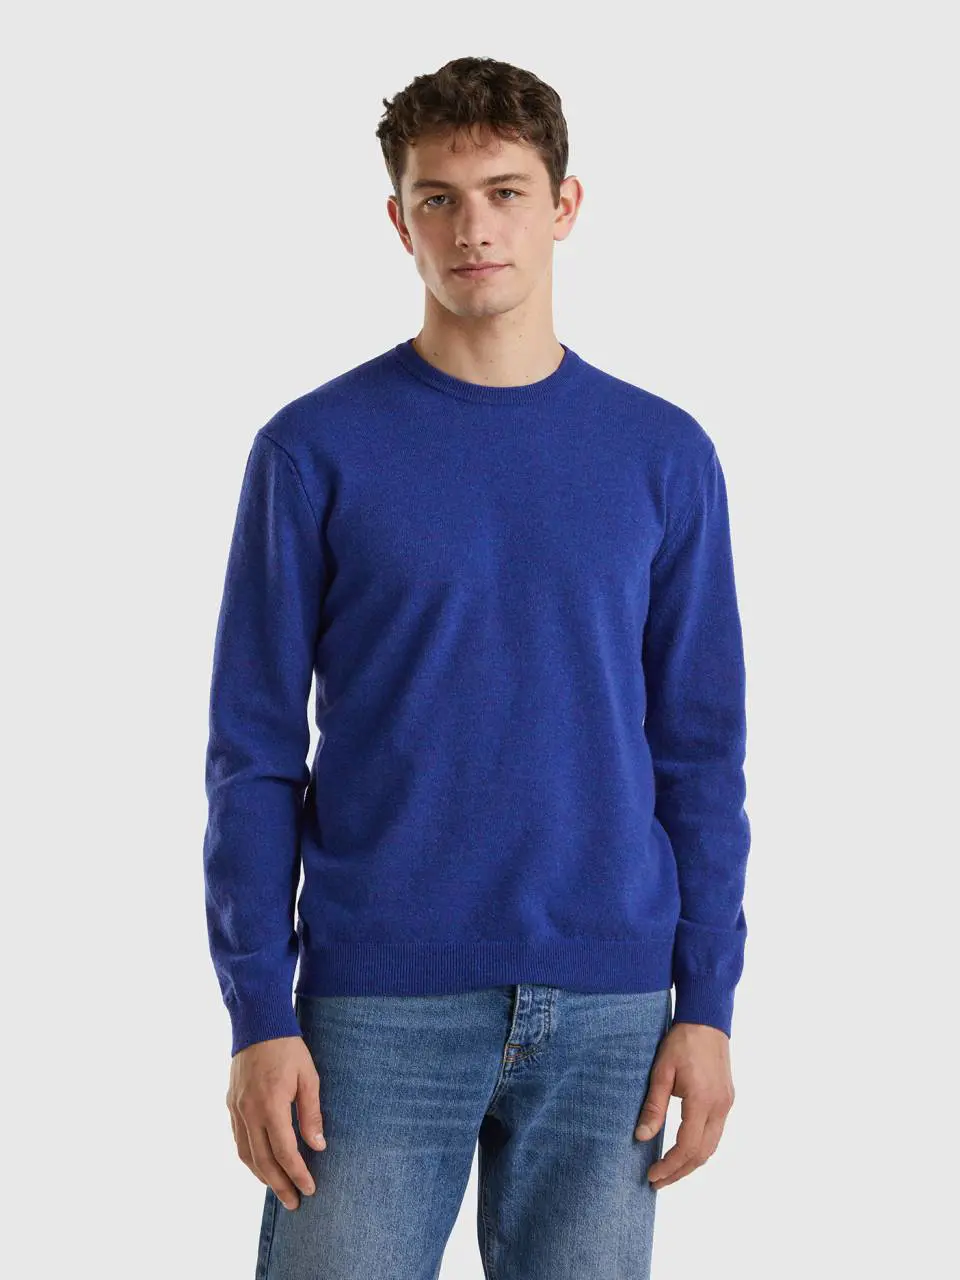 Benetton cornflower blue crew neck sweater in pure merino wool. 1